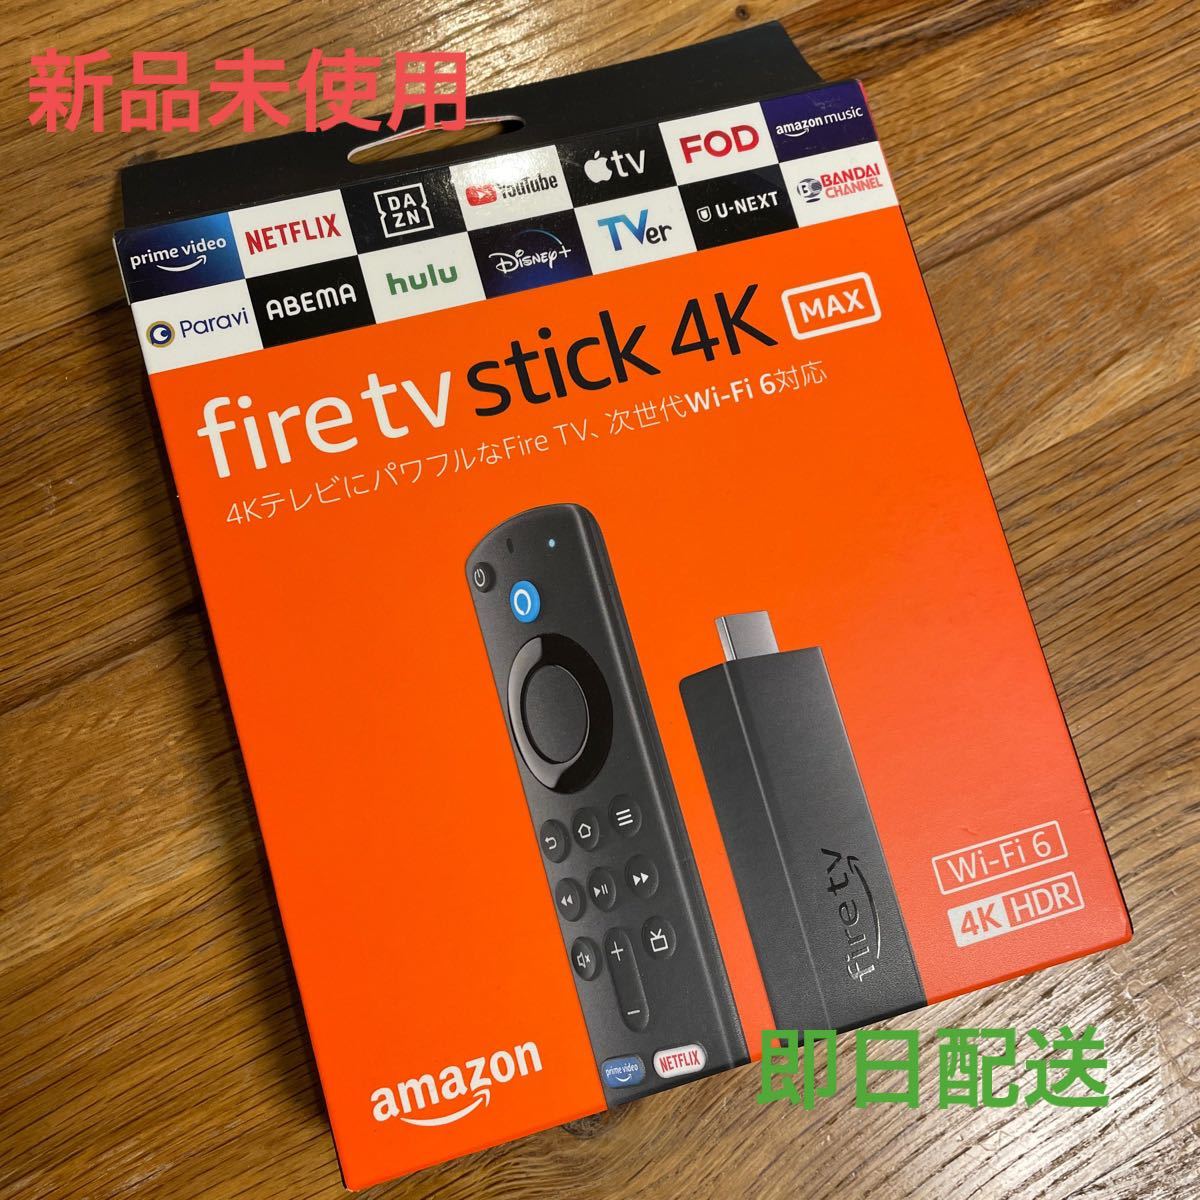 Amazon Fire TV Stick 4K max 新品未開封 2個セット テレビ、映像機器 AV周辺機器